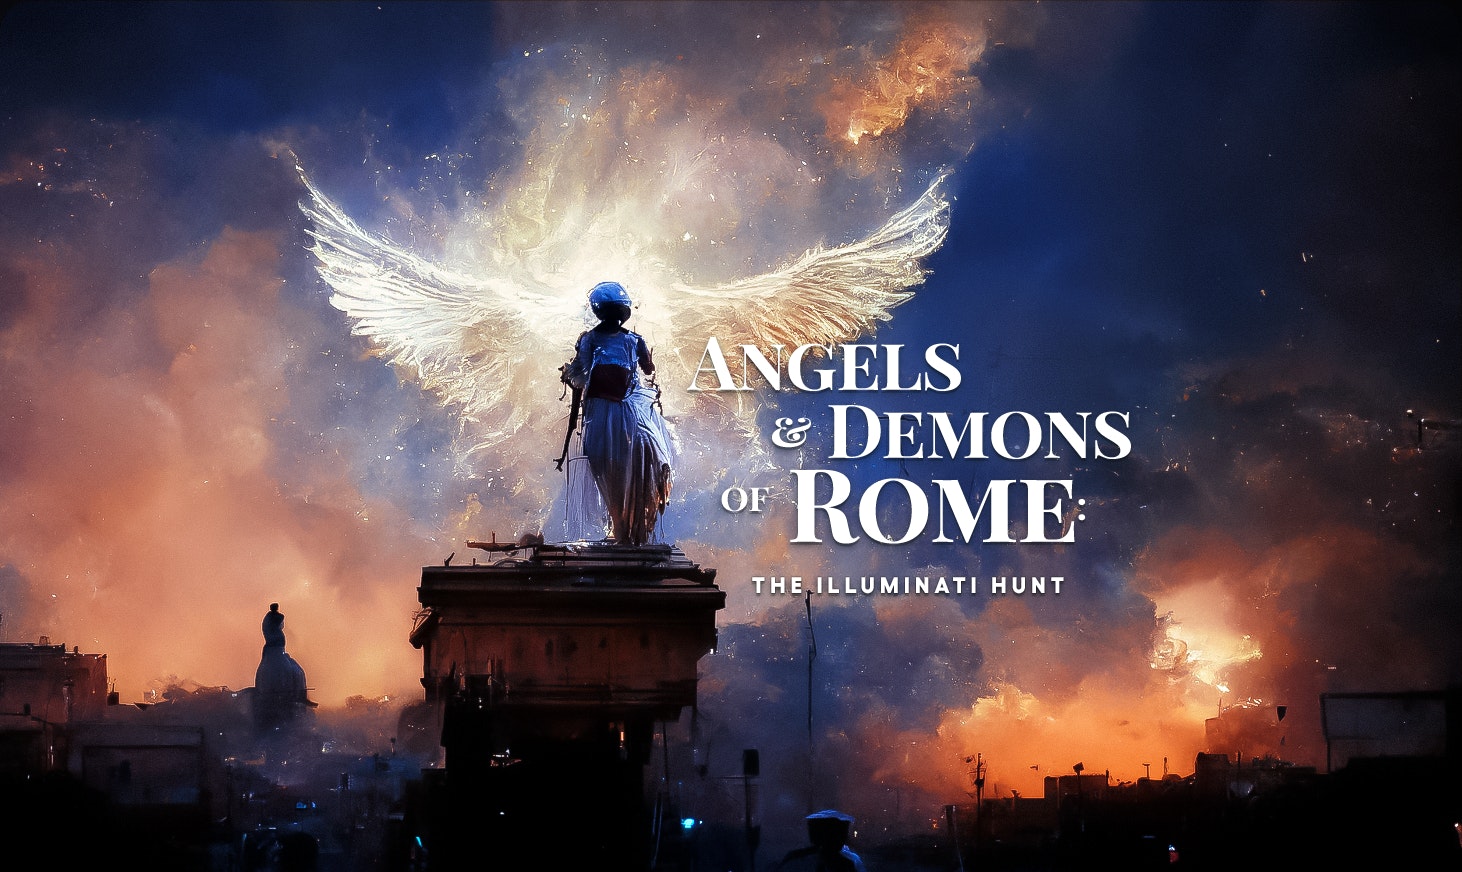 Angels & Demons of Rome: The Illuminati Hunt (audio stories)